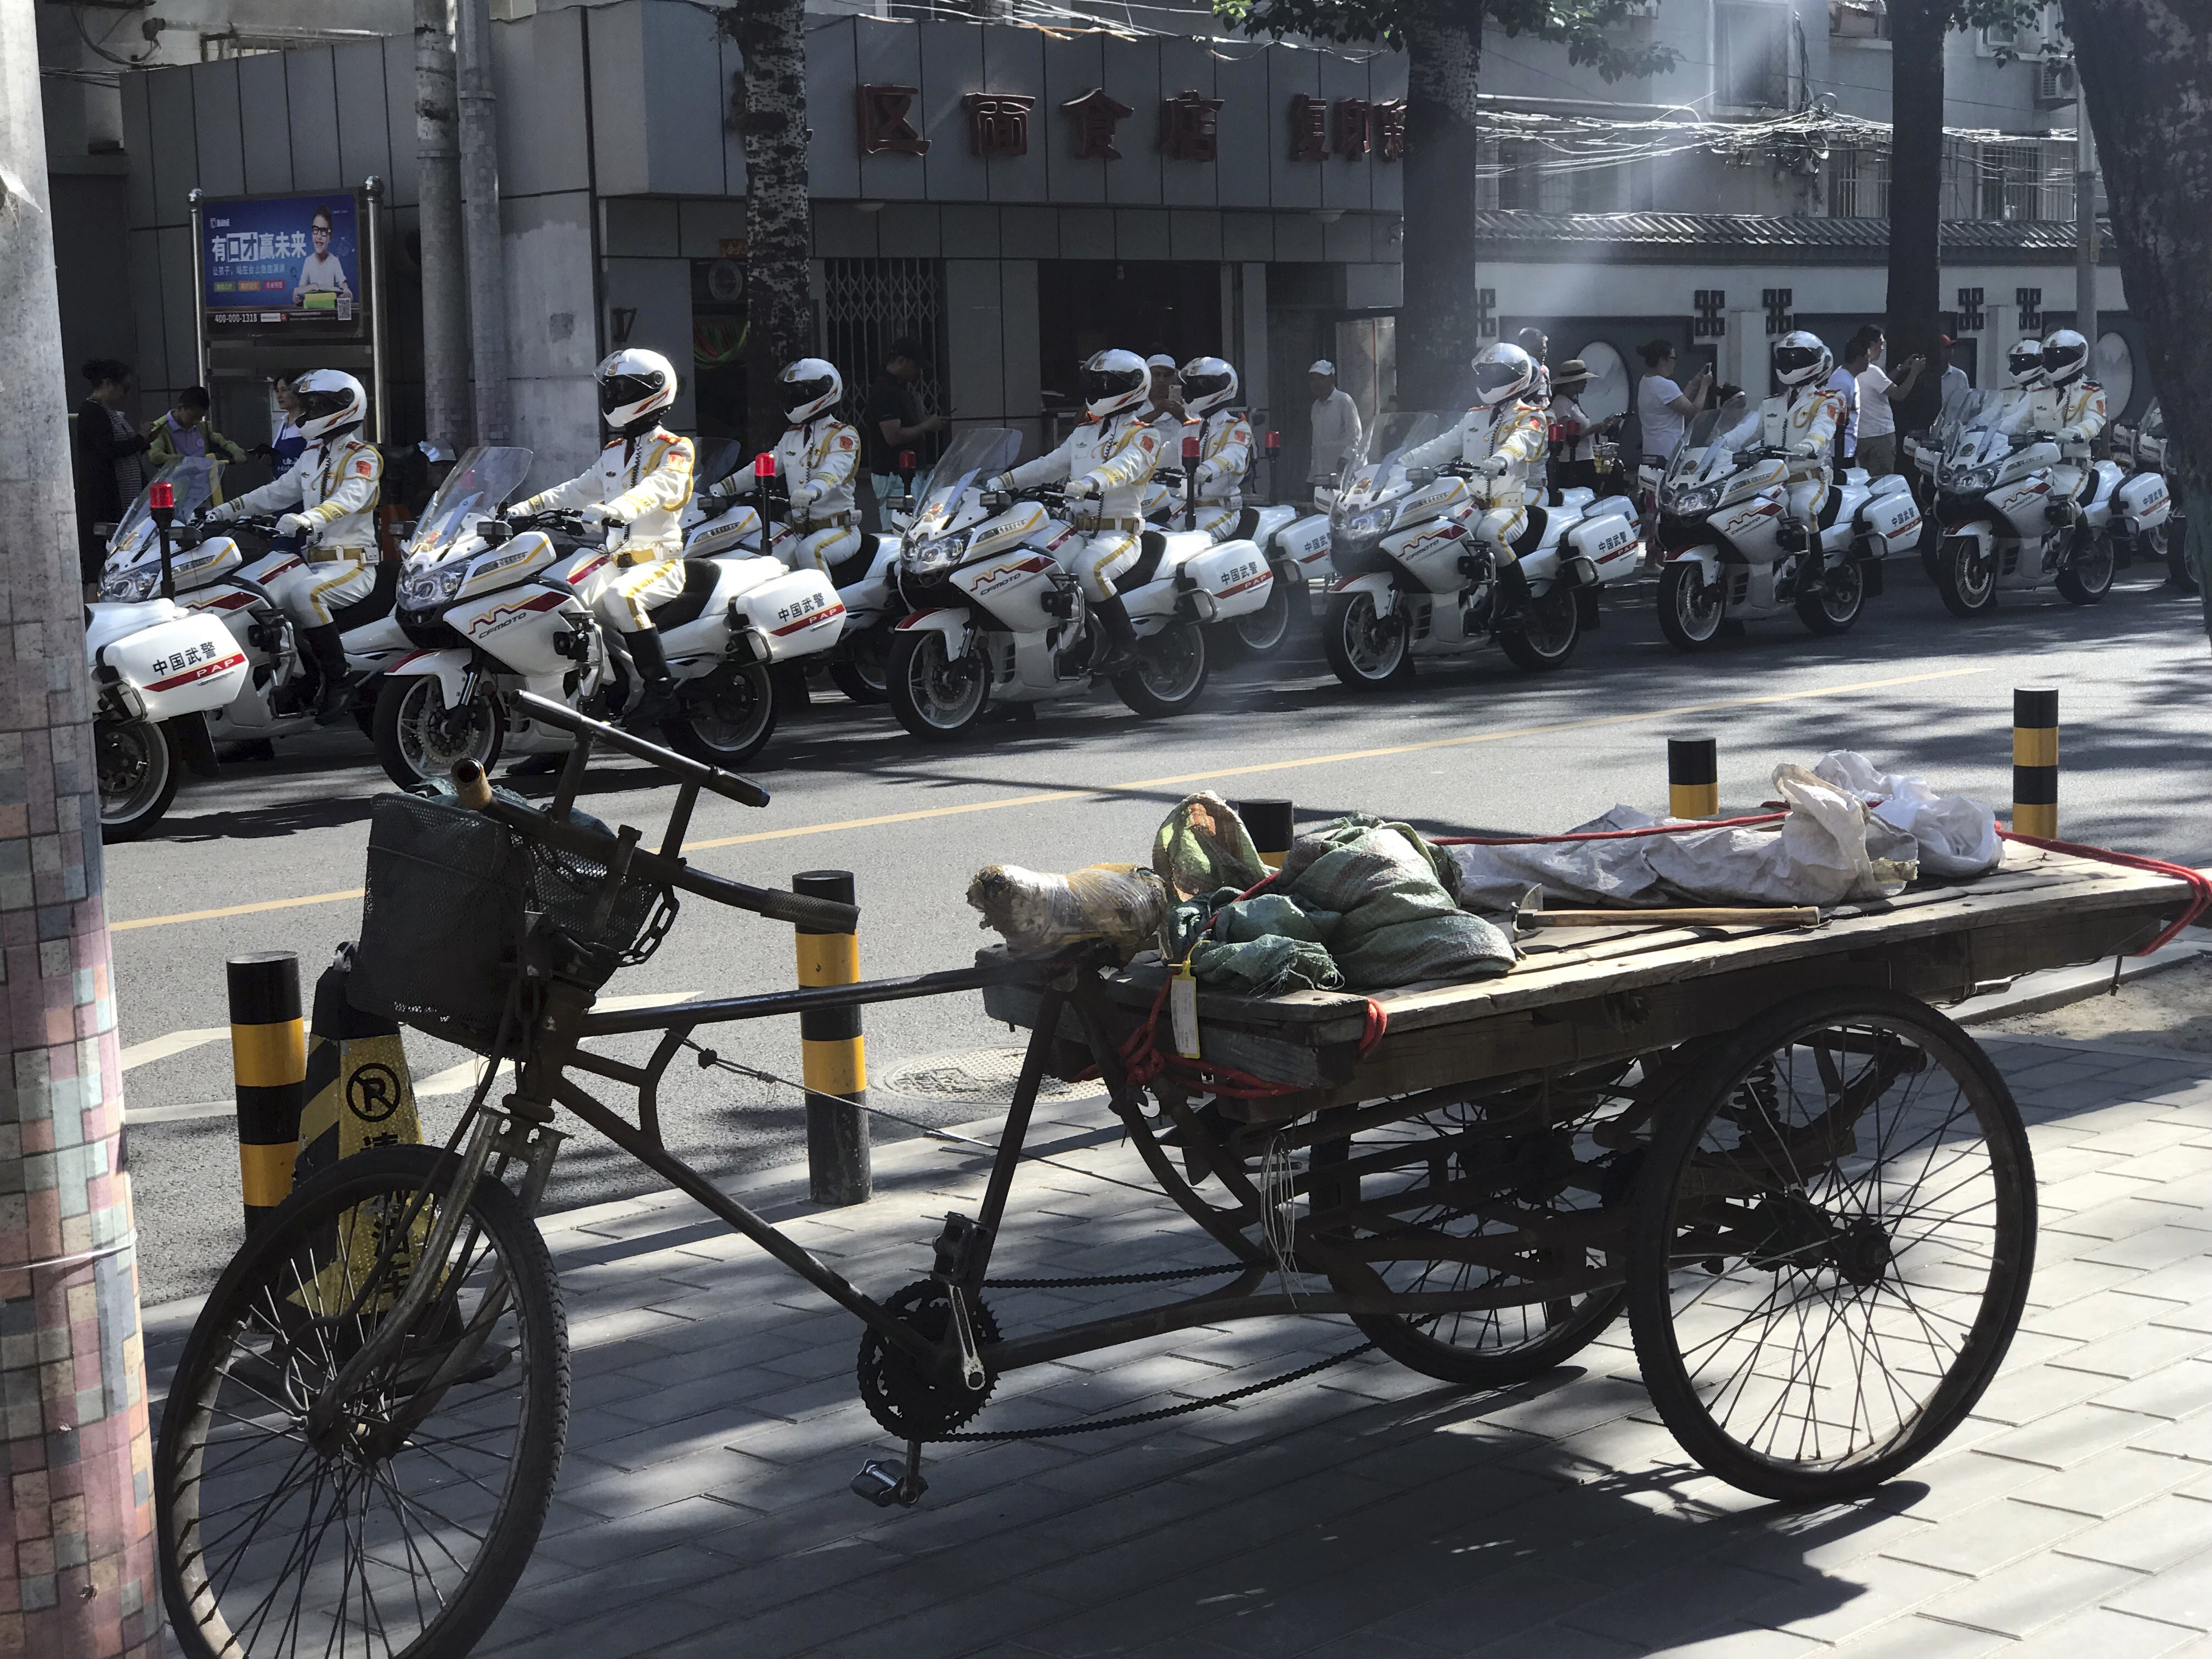 Police motorcycle escorts wait for Kim Jong Un's motorcad